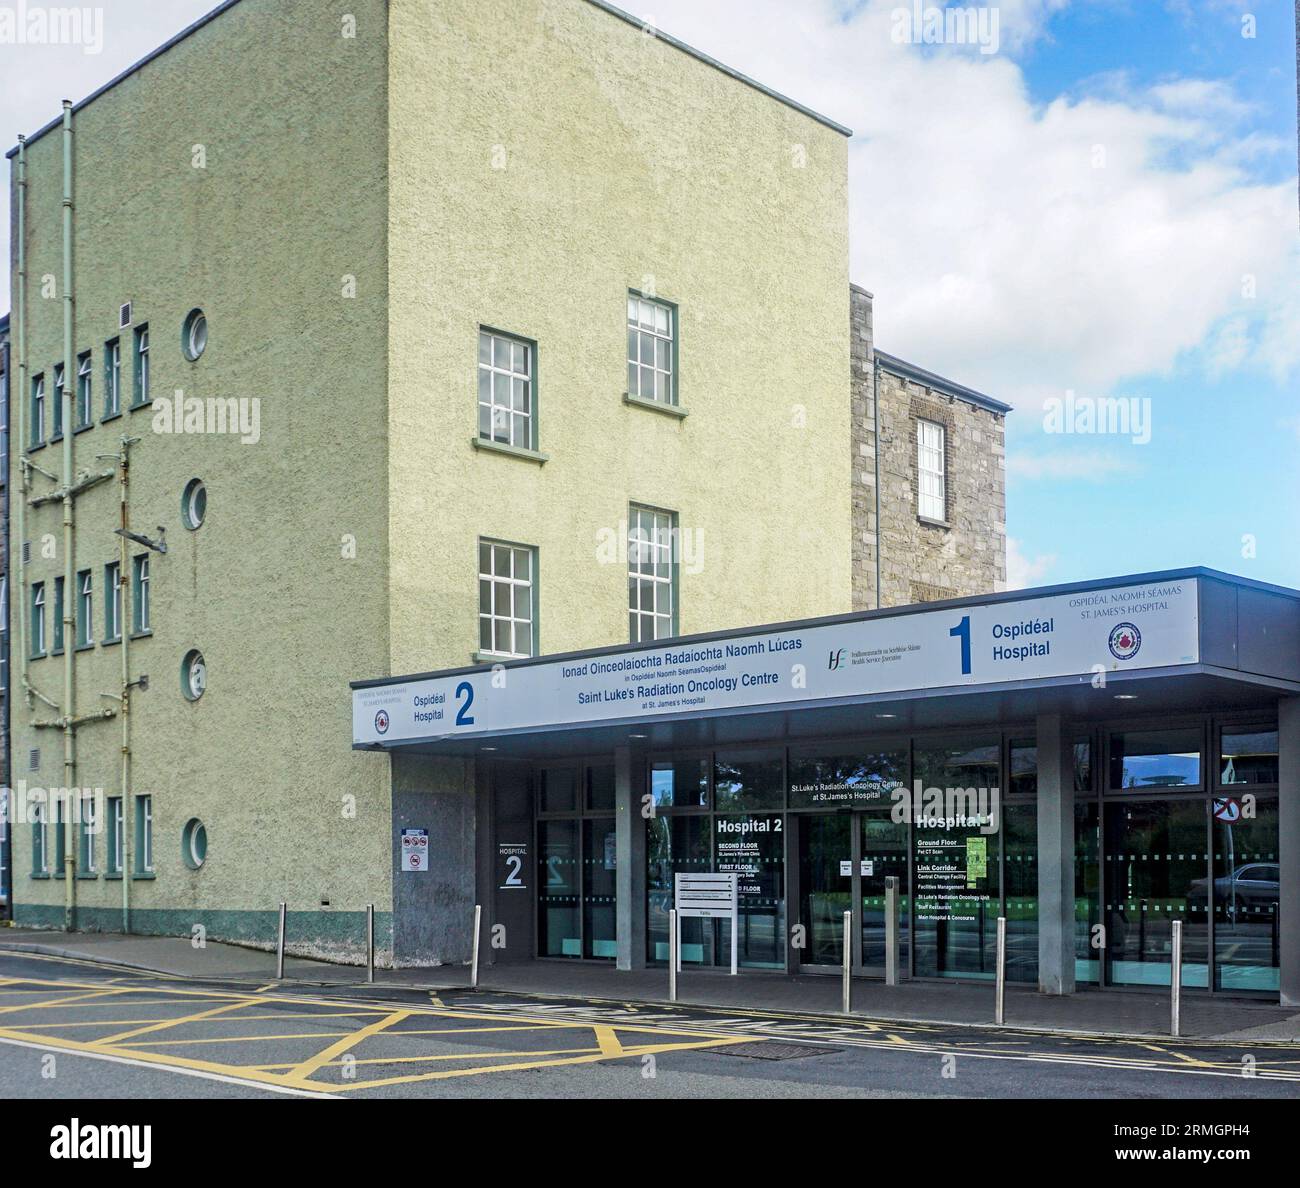 Saint Lukes Radiation Oncology Centre, parte del St James Hospital Campus di Dublino, Irlanda. Foto Stock